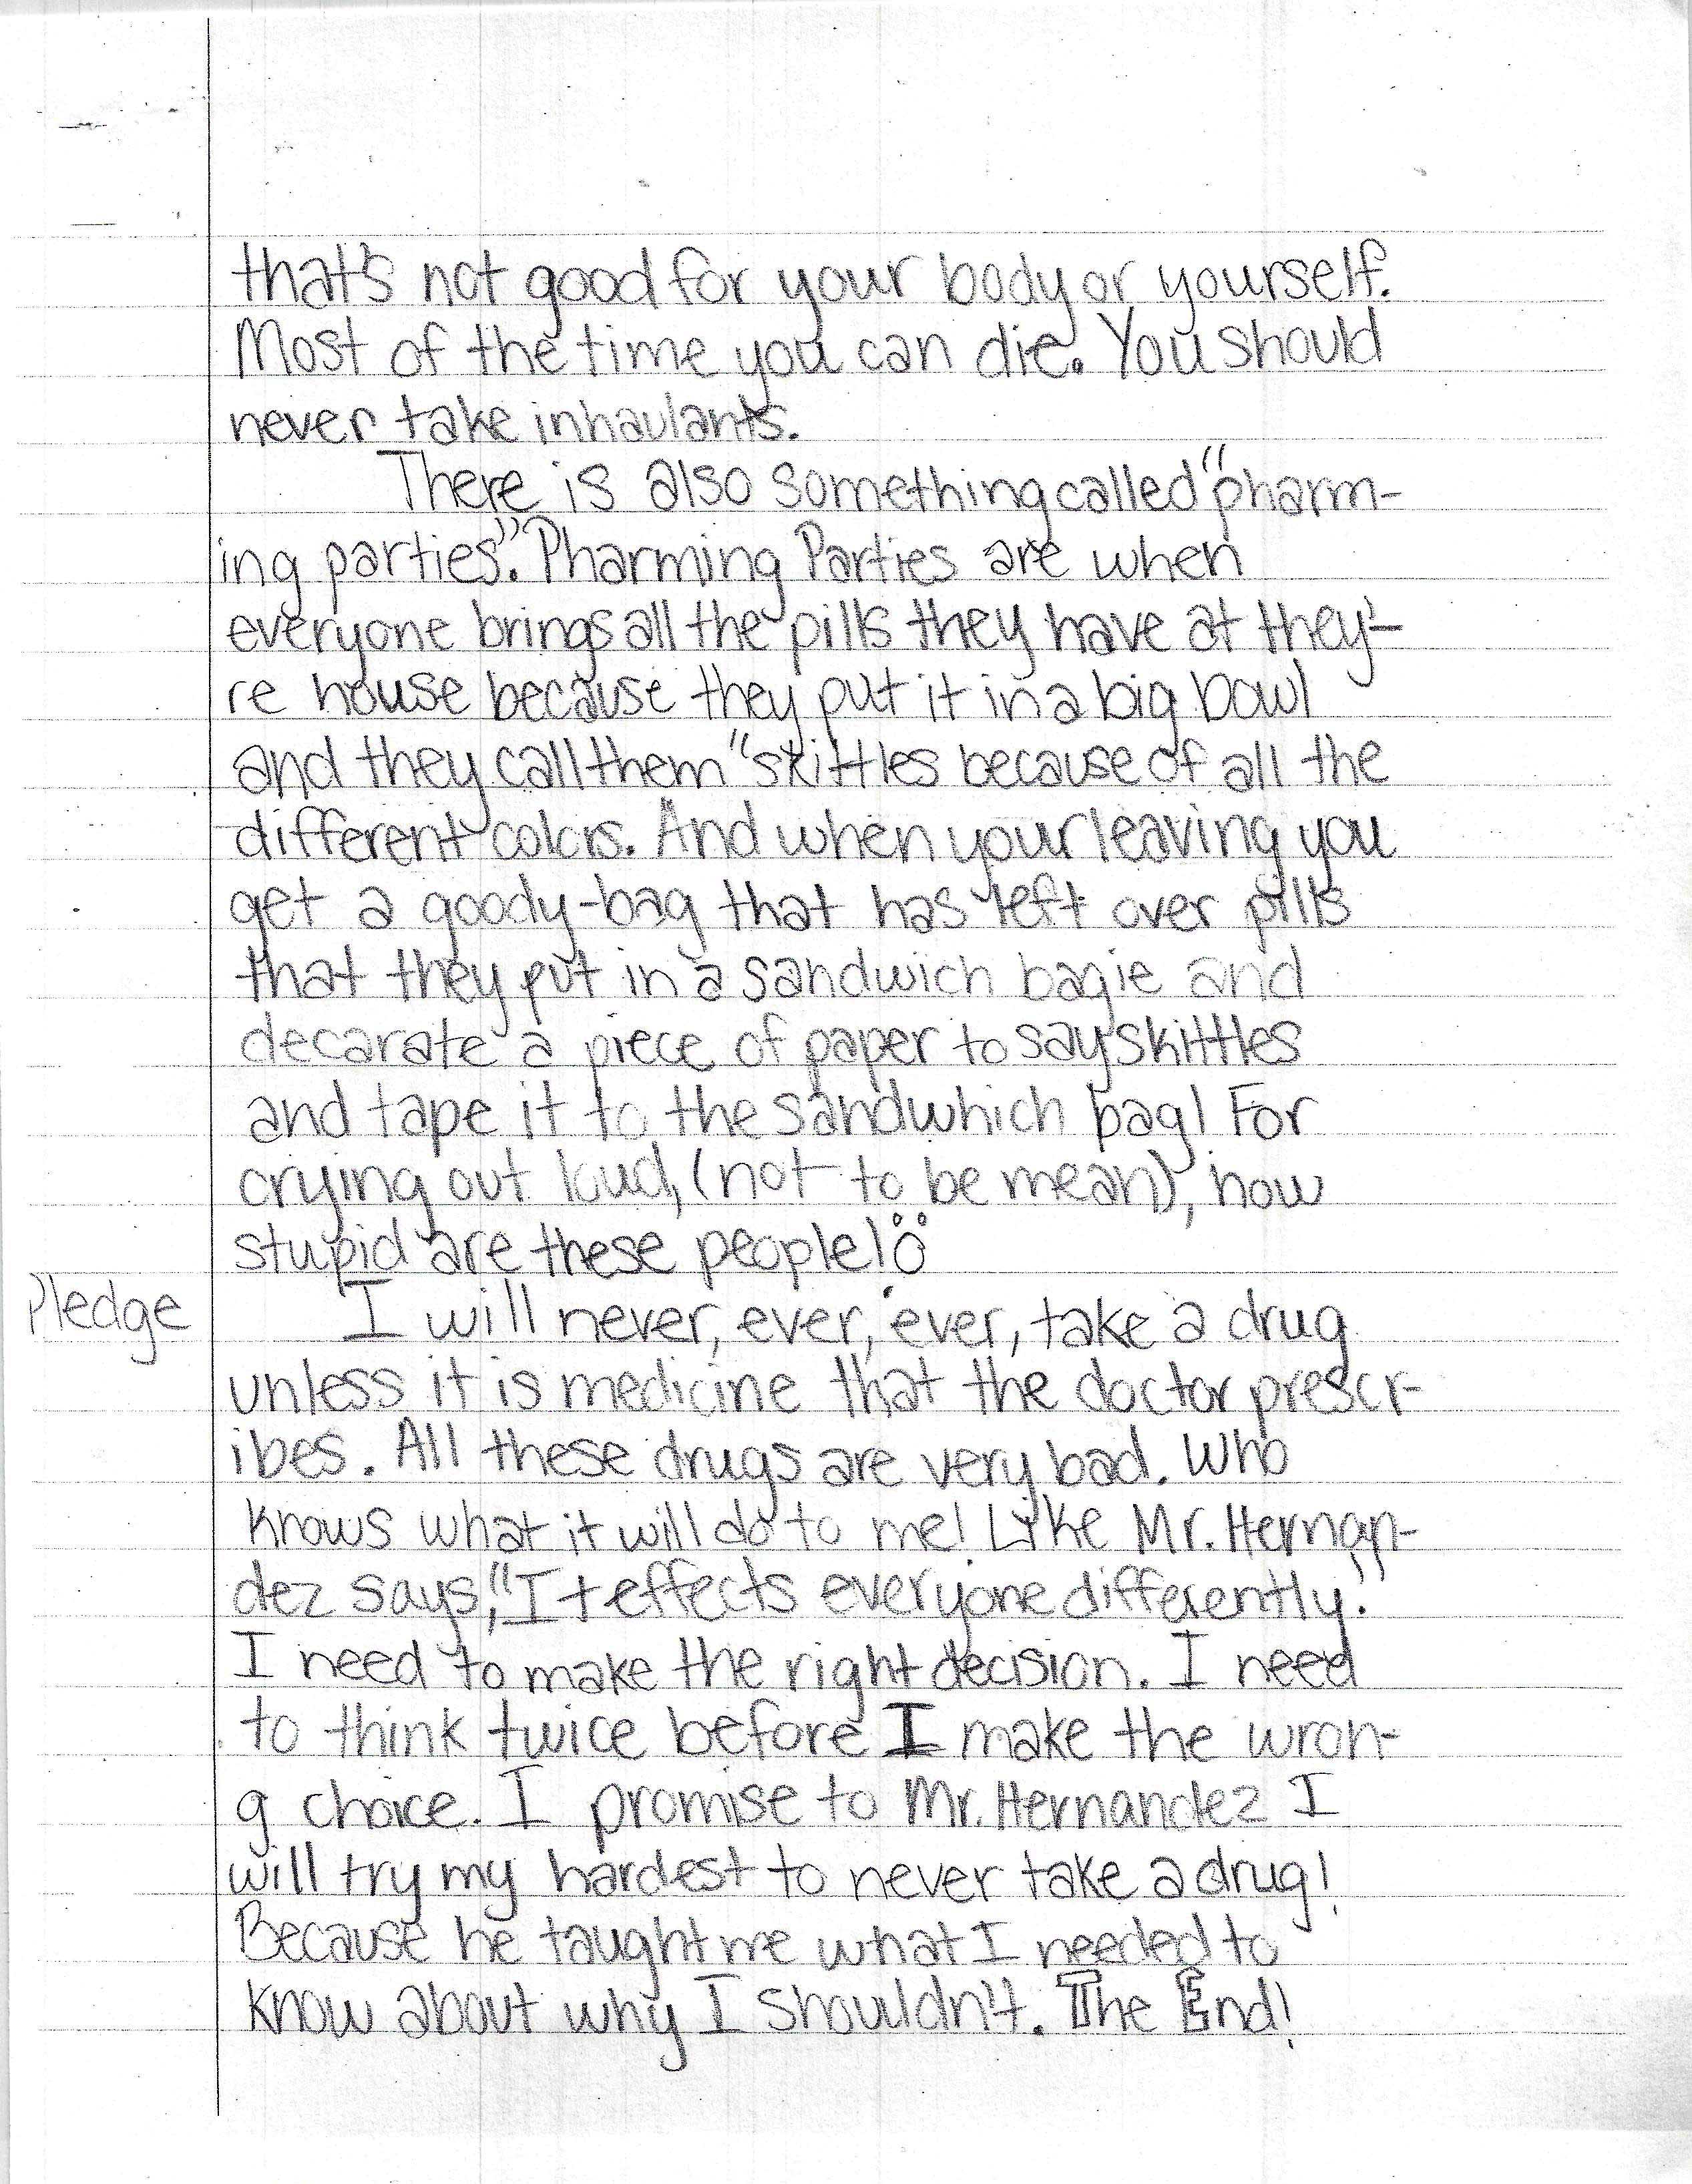 Bullying essay example